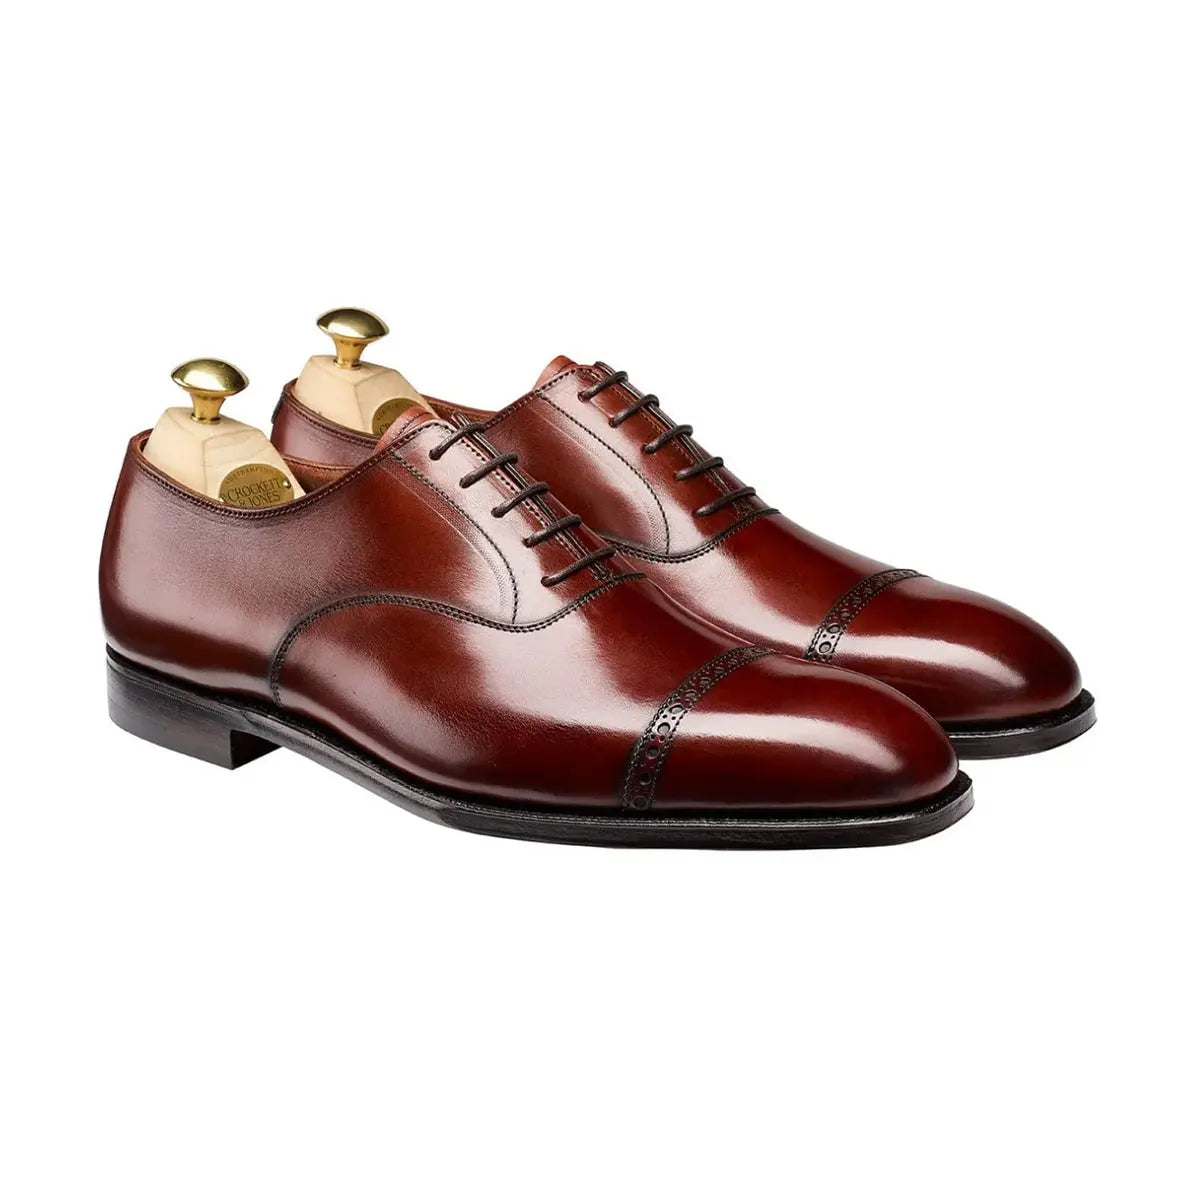 Belgrave Hand Grade Oxford Shoes  Crockett & Jones Chestnut UK 6 